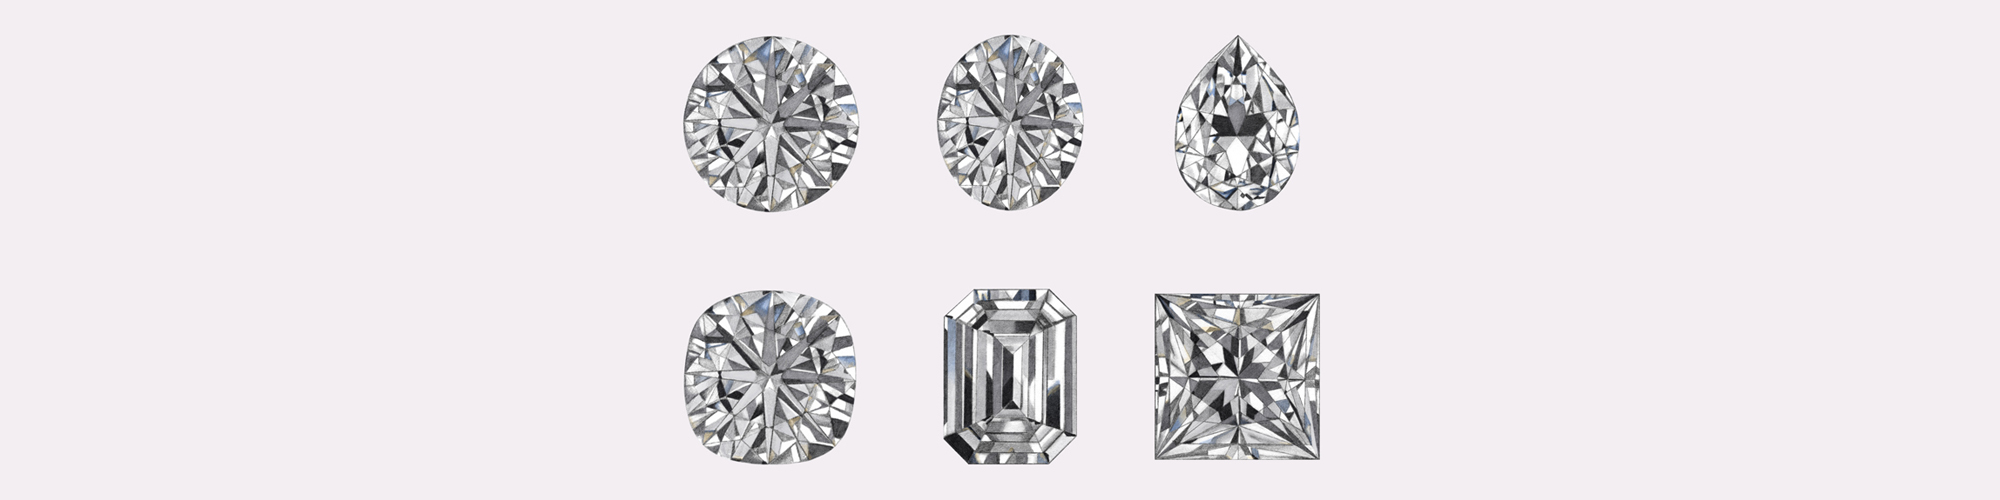 giulia-borsi-illustration-diamond-shapes